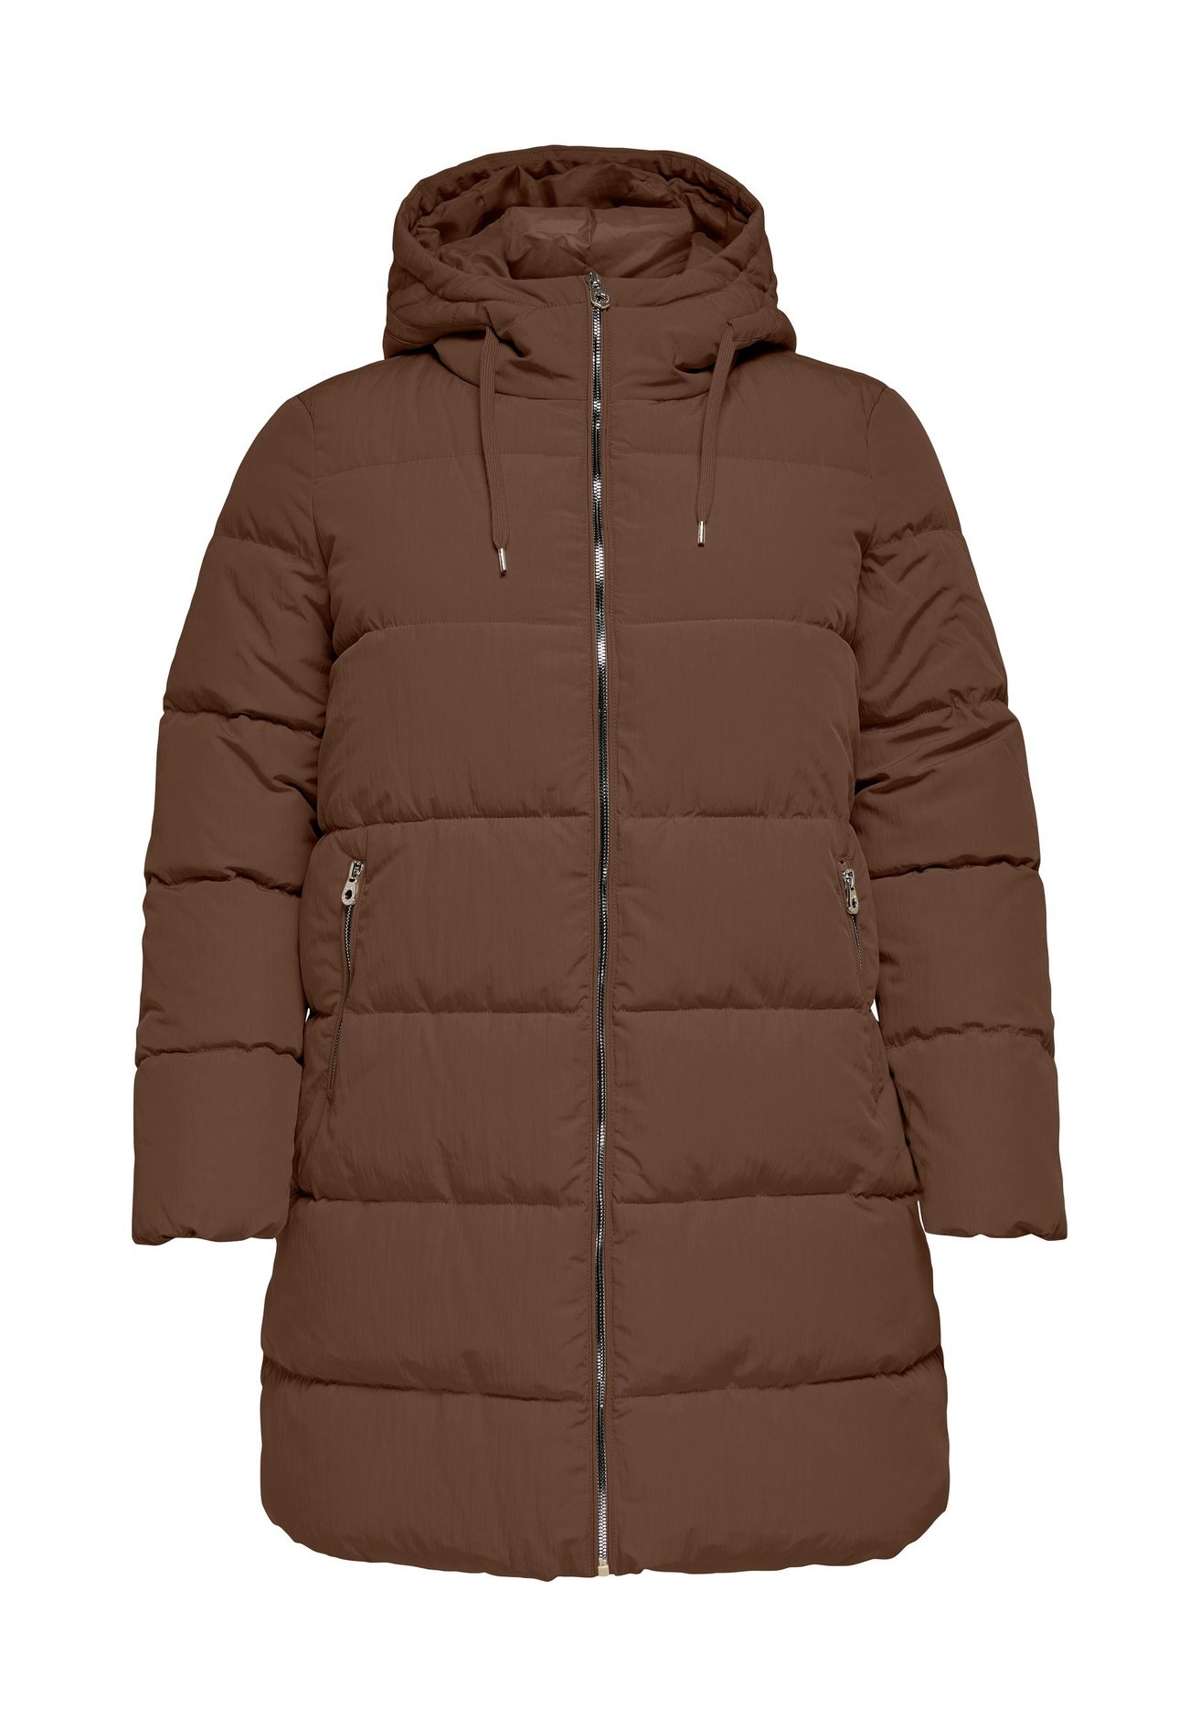 Зимняя куртка CARNEWDOLLY LONG PUFFER COAT